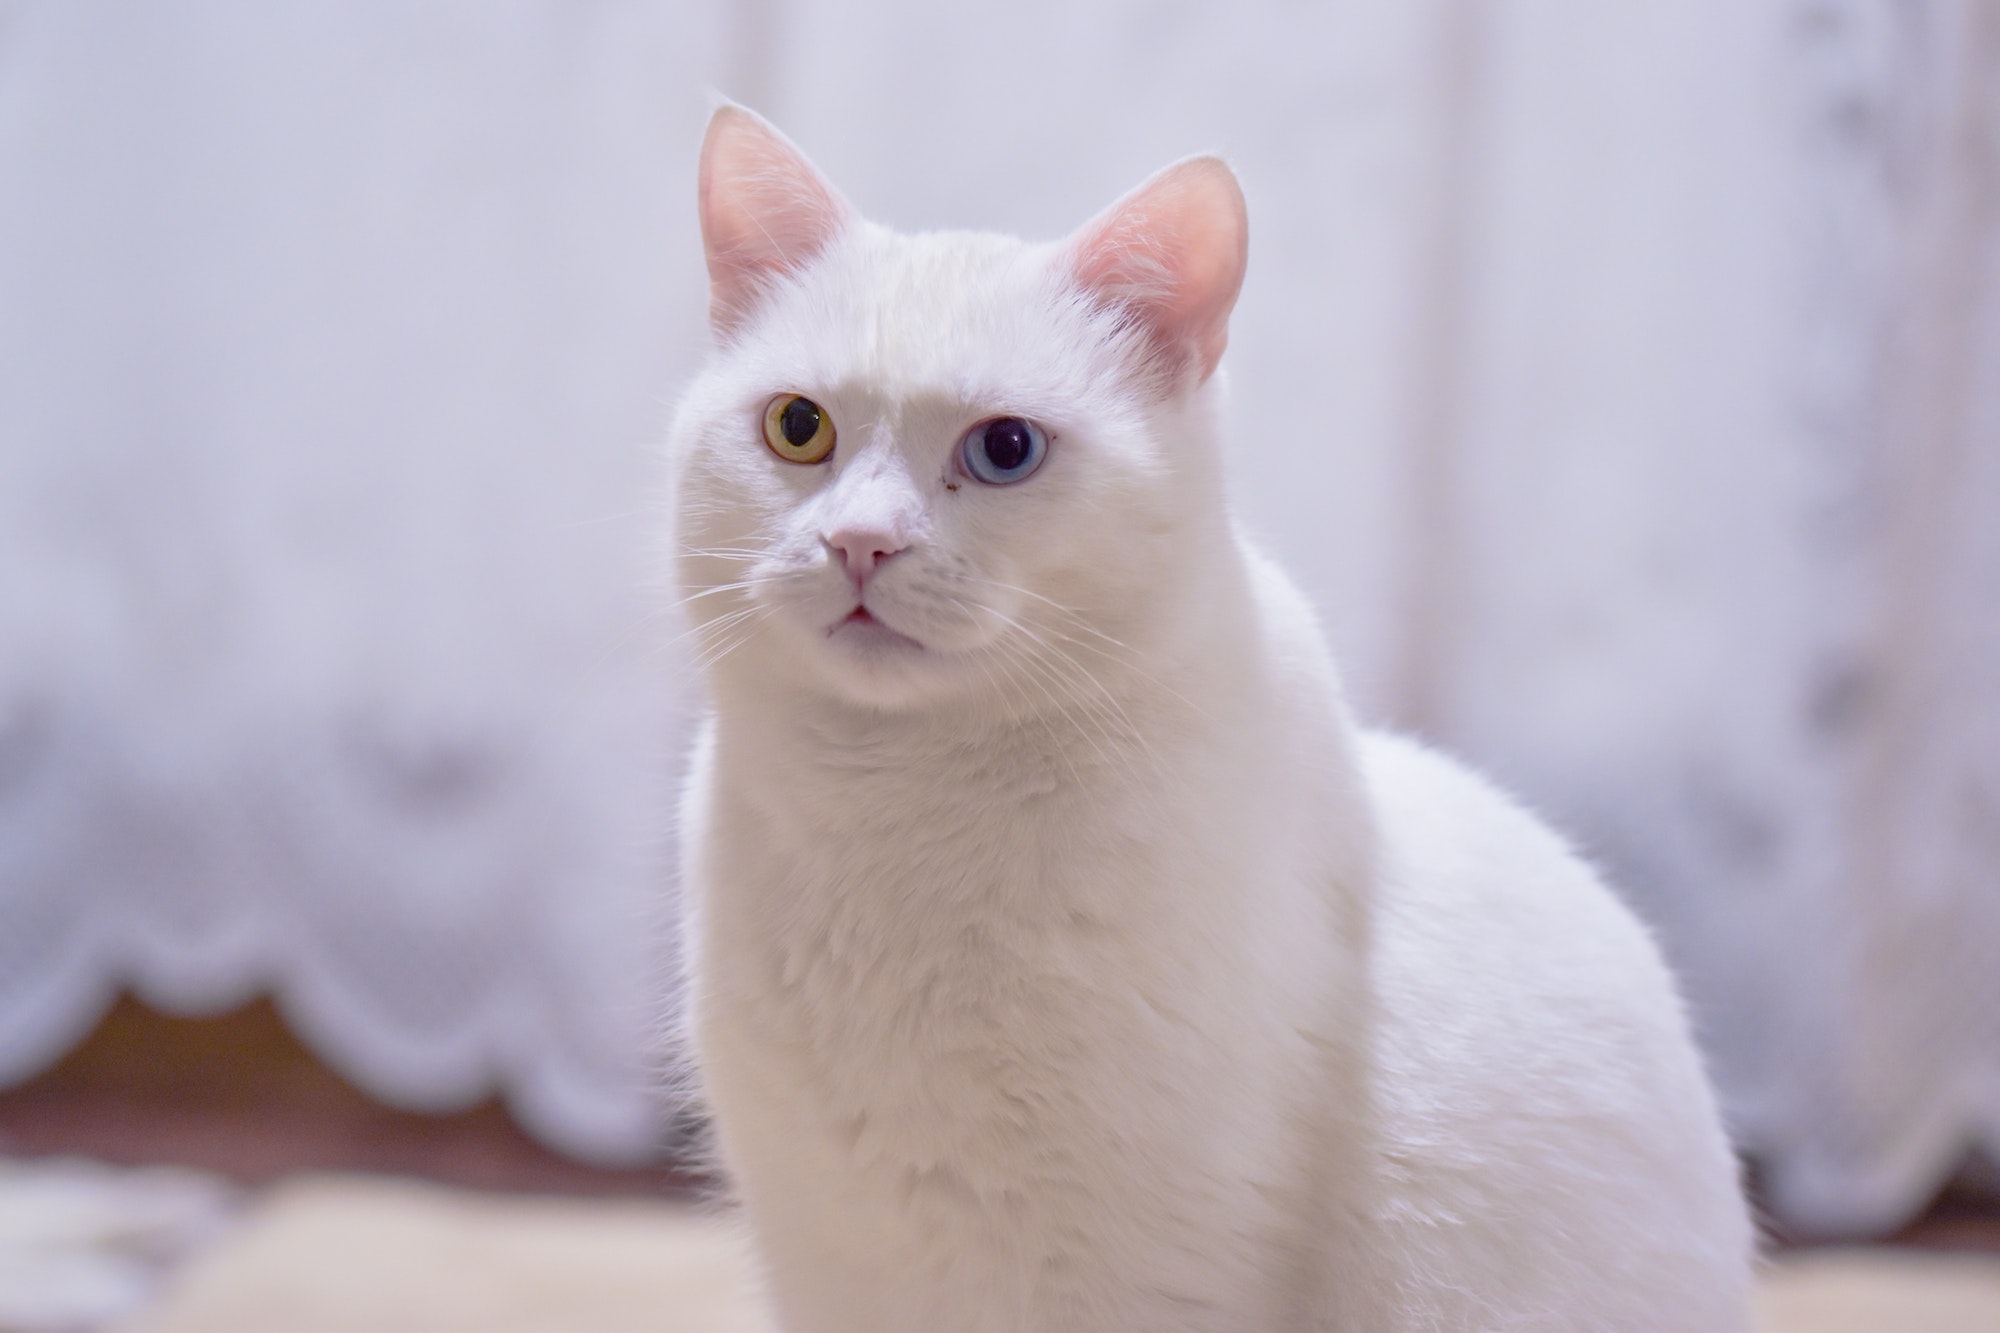 Adorable white angora cat with heterochromia eyes